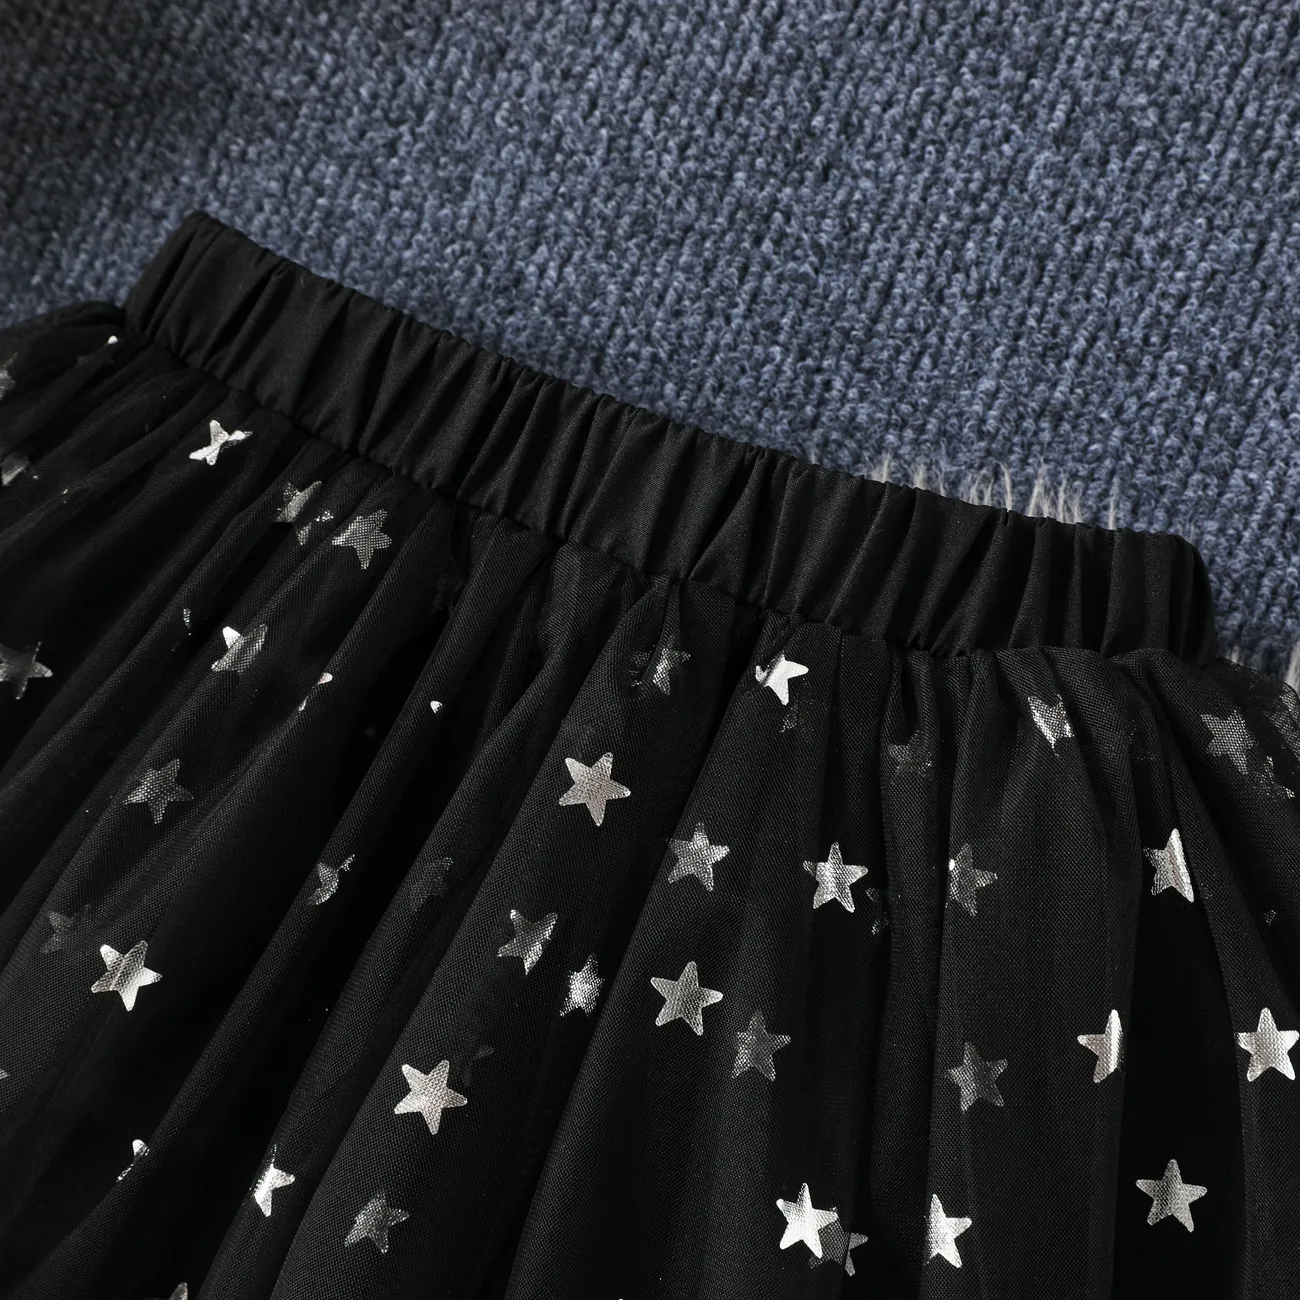 Sweet Oversized Multi-layered Stars Skirt for Girls - 100% Polyester Black big image 1